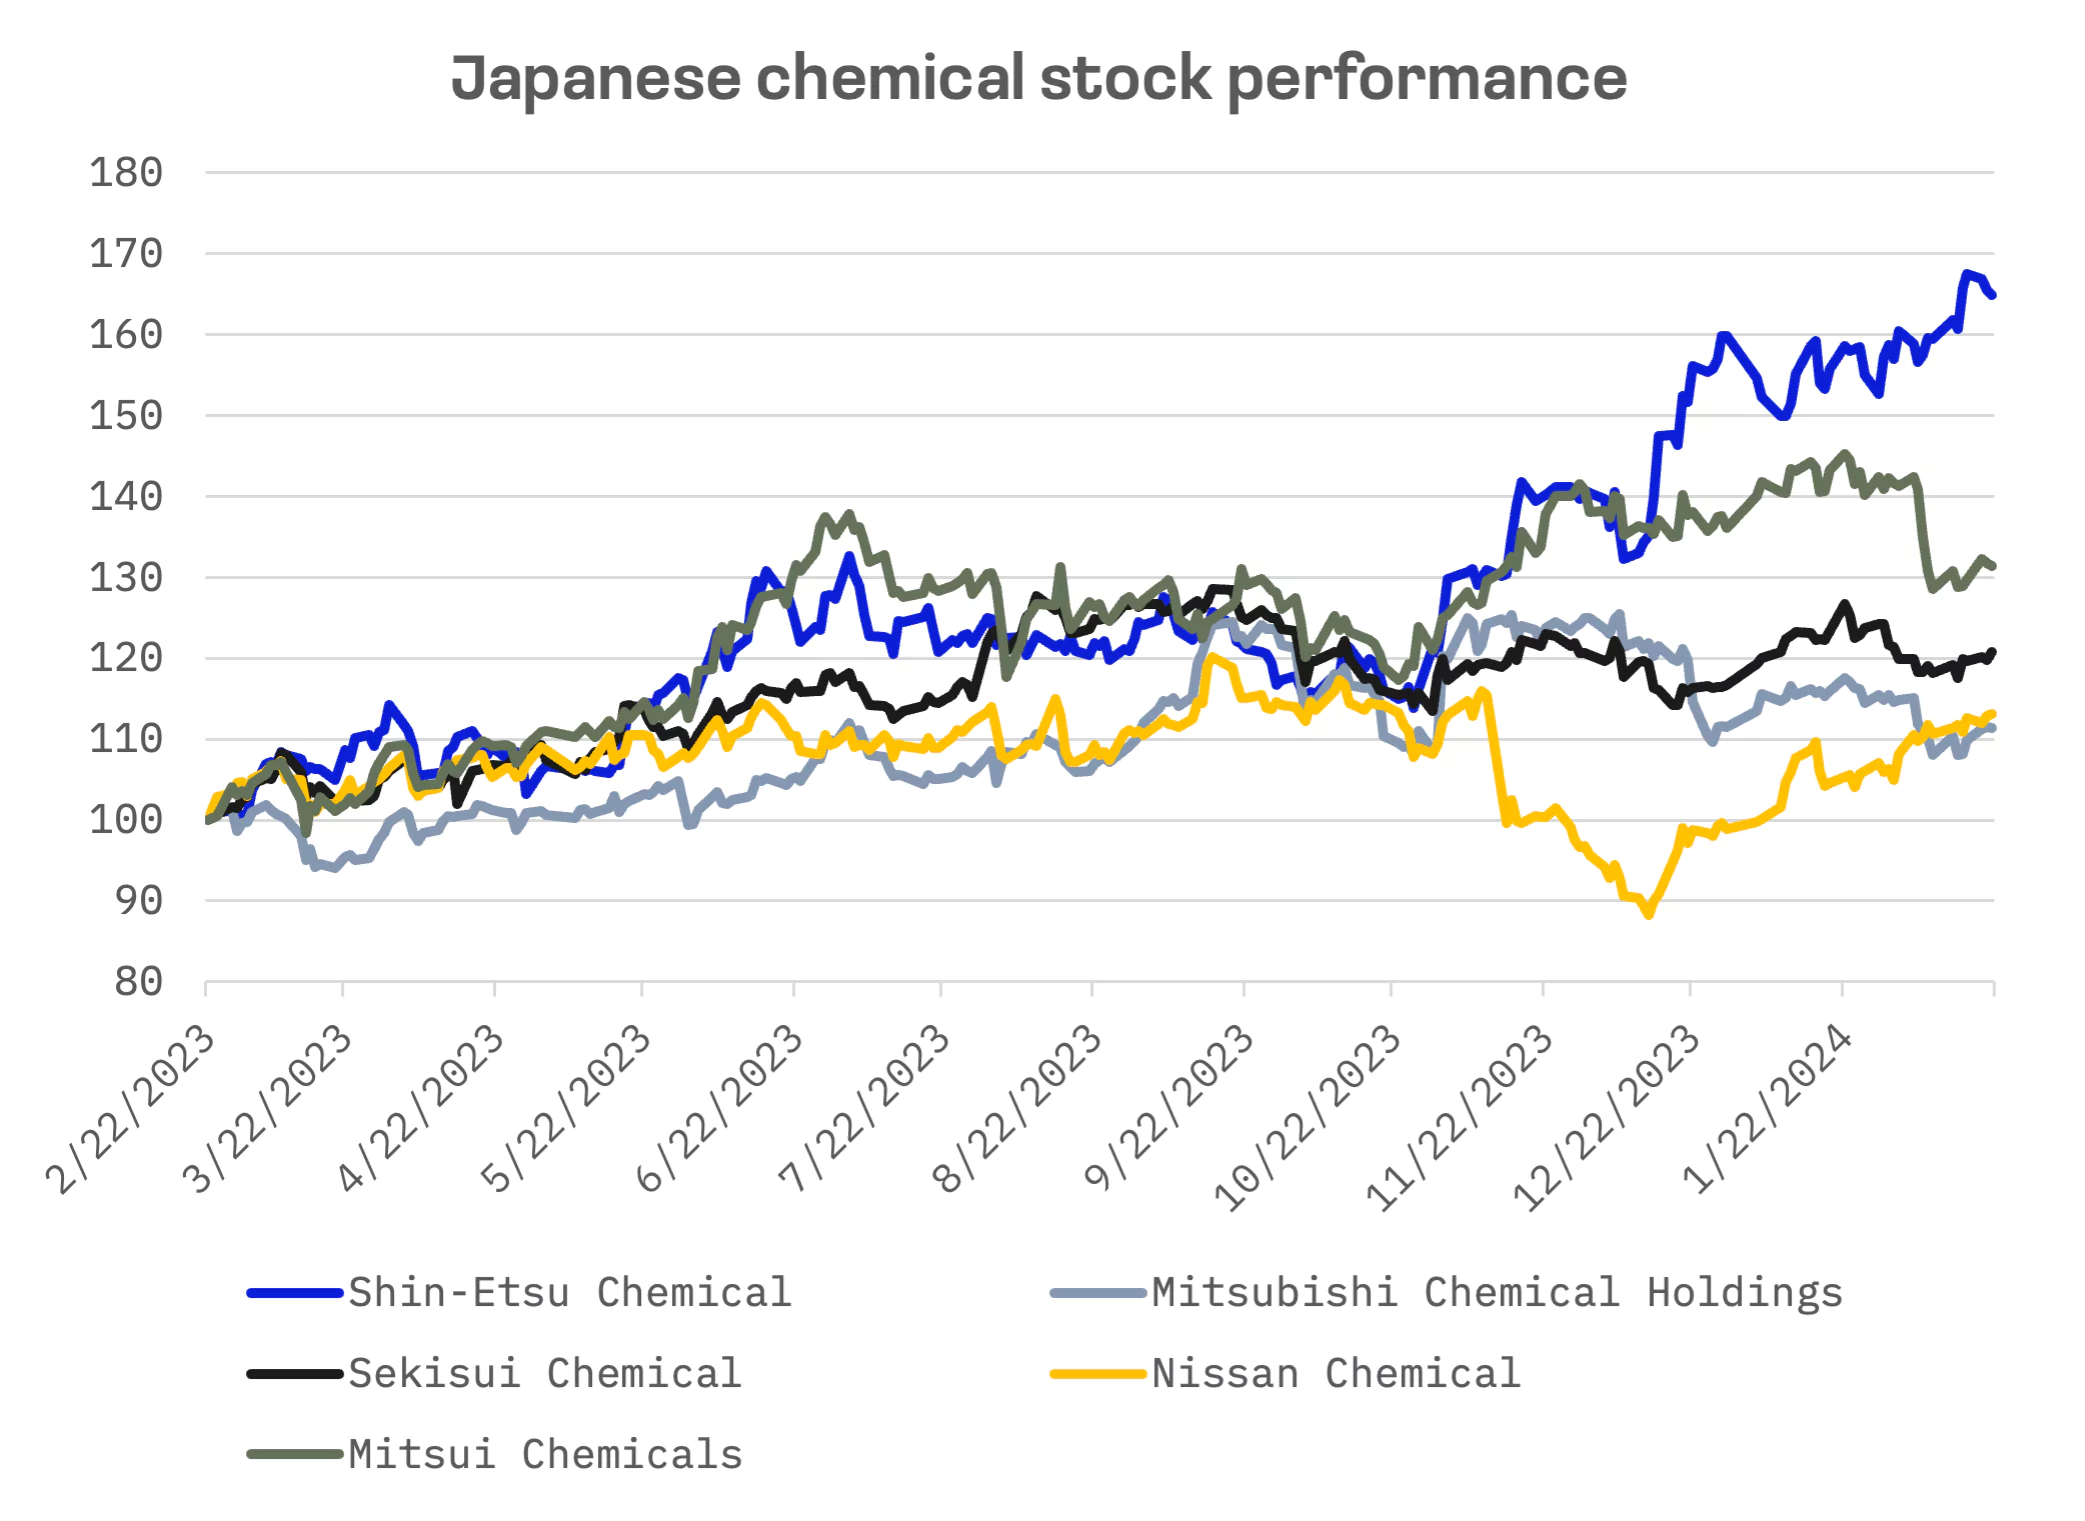 Shin-Etsu Leads as Japan’s Chemical Giants Struggle Against Global Pressures: image 3